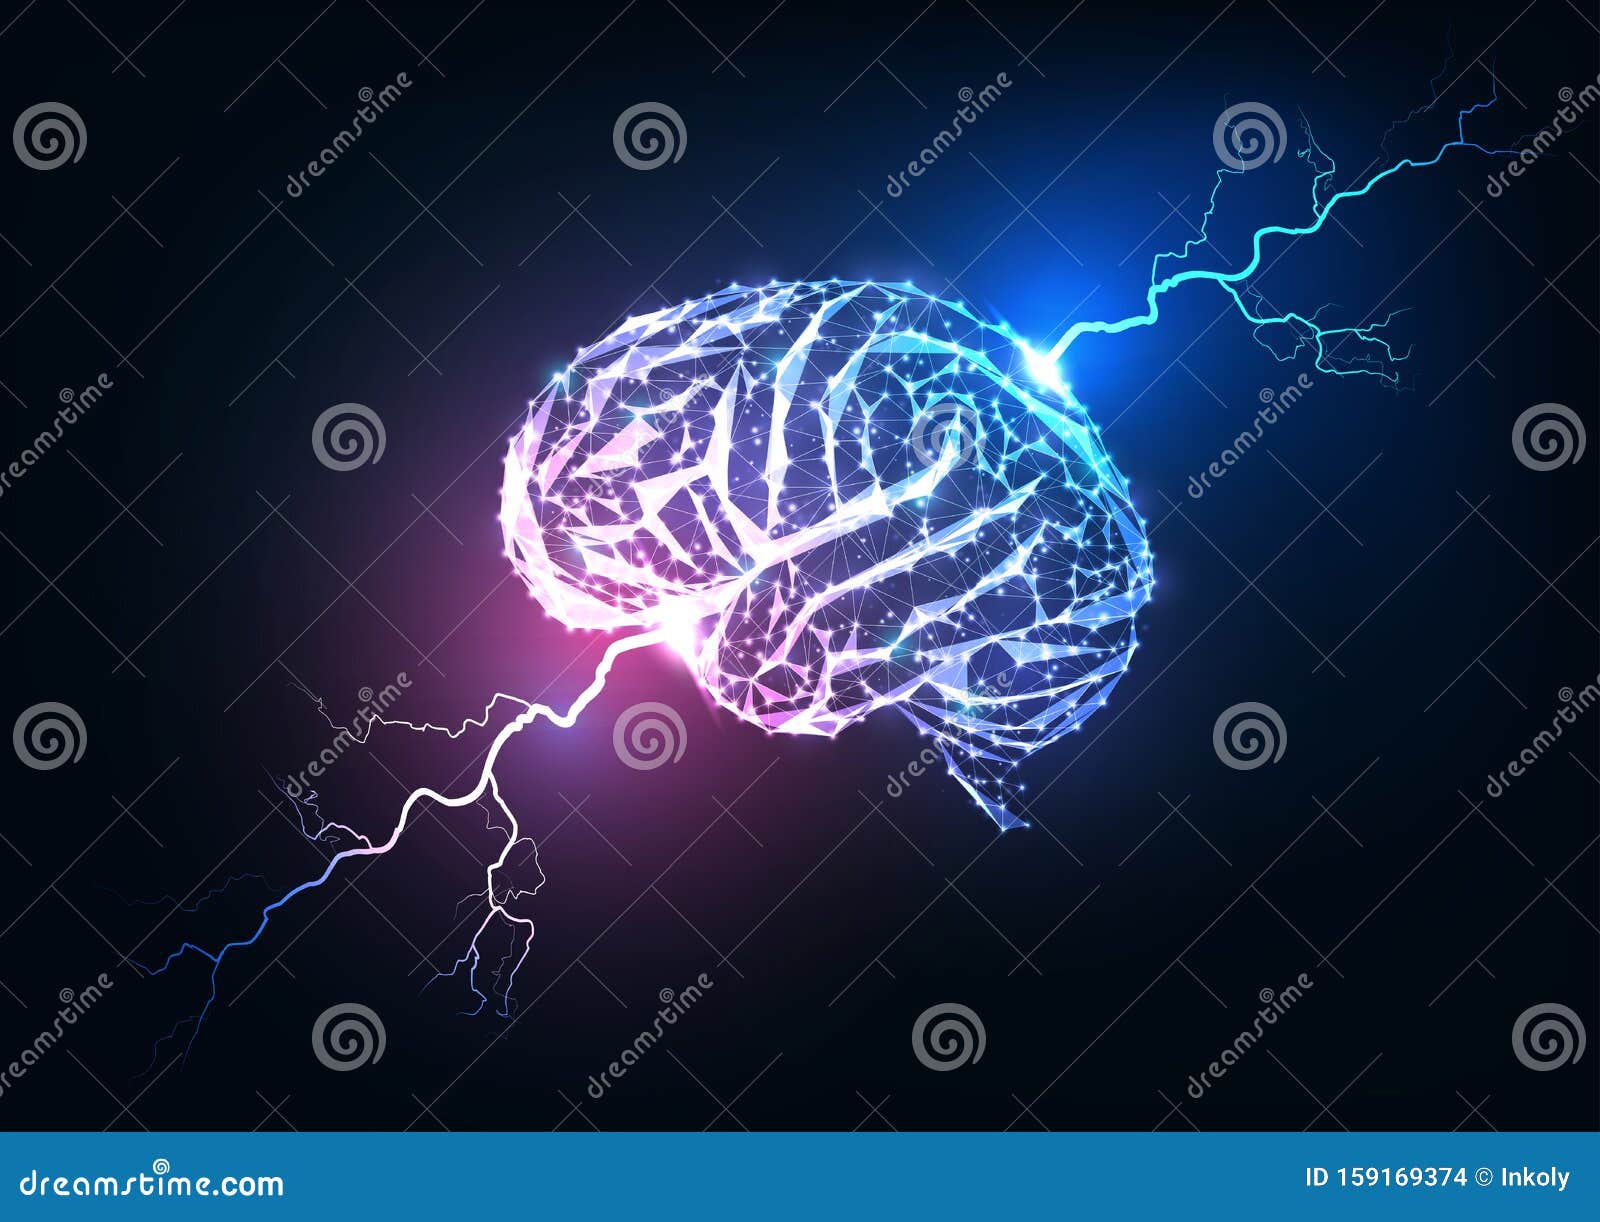 human brain impulse concept. futuristic glowing low polygonal brain and lightnings